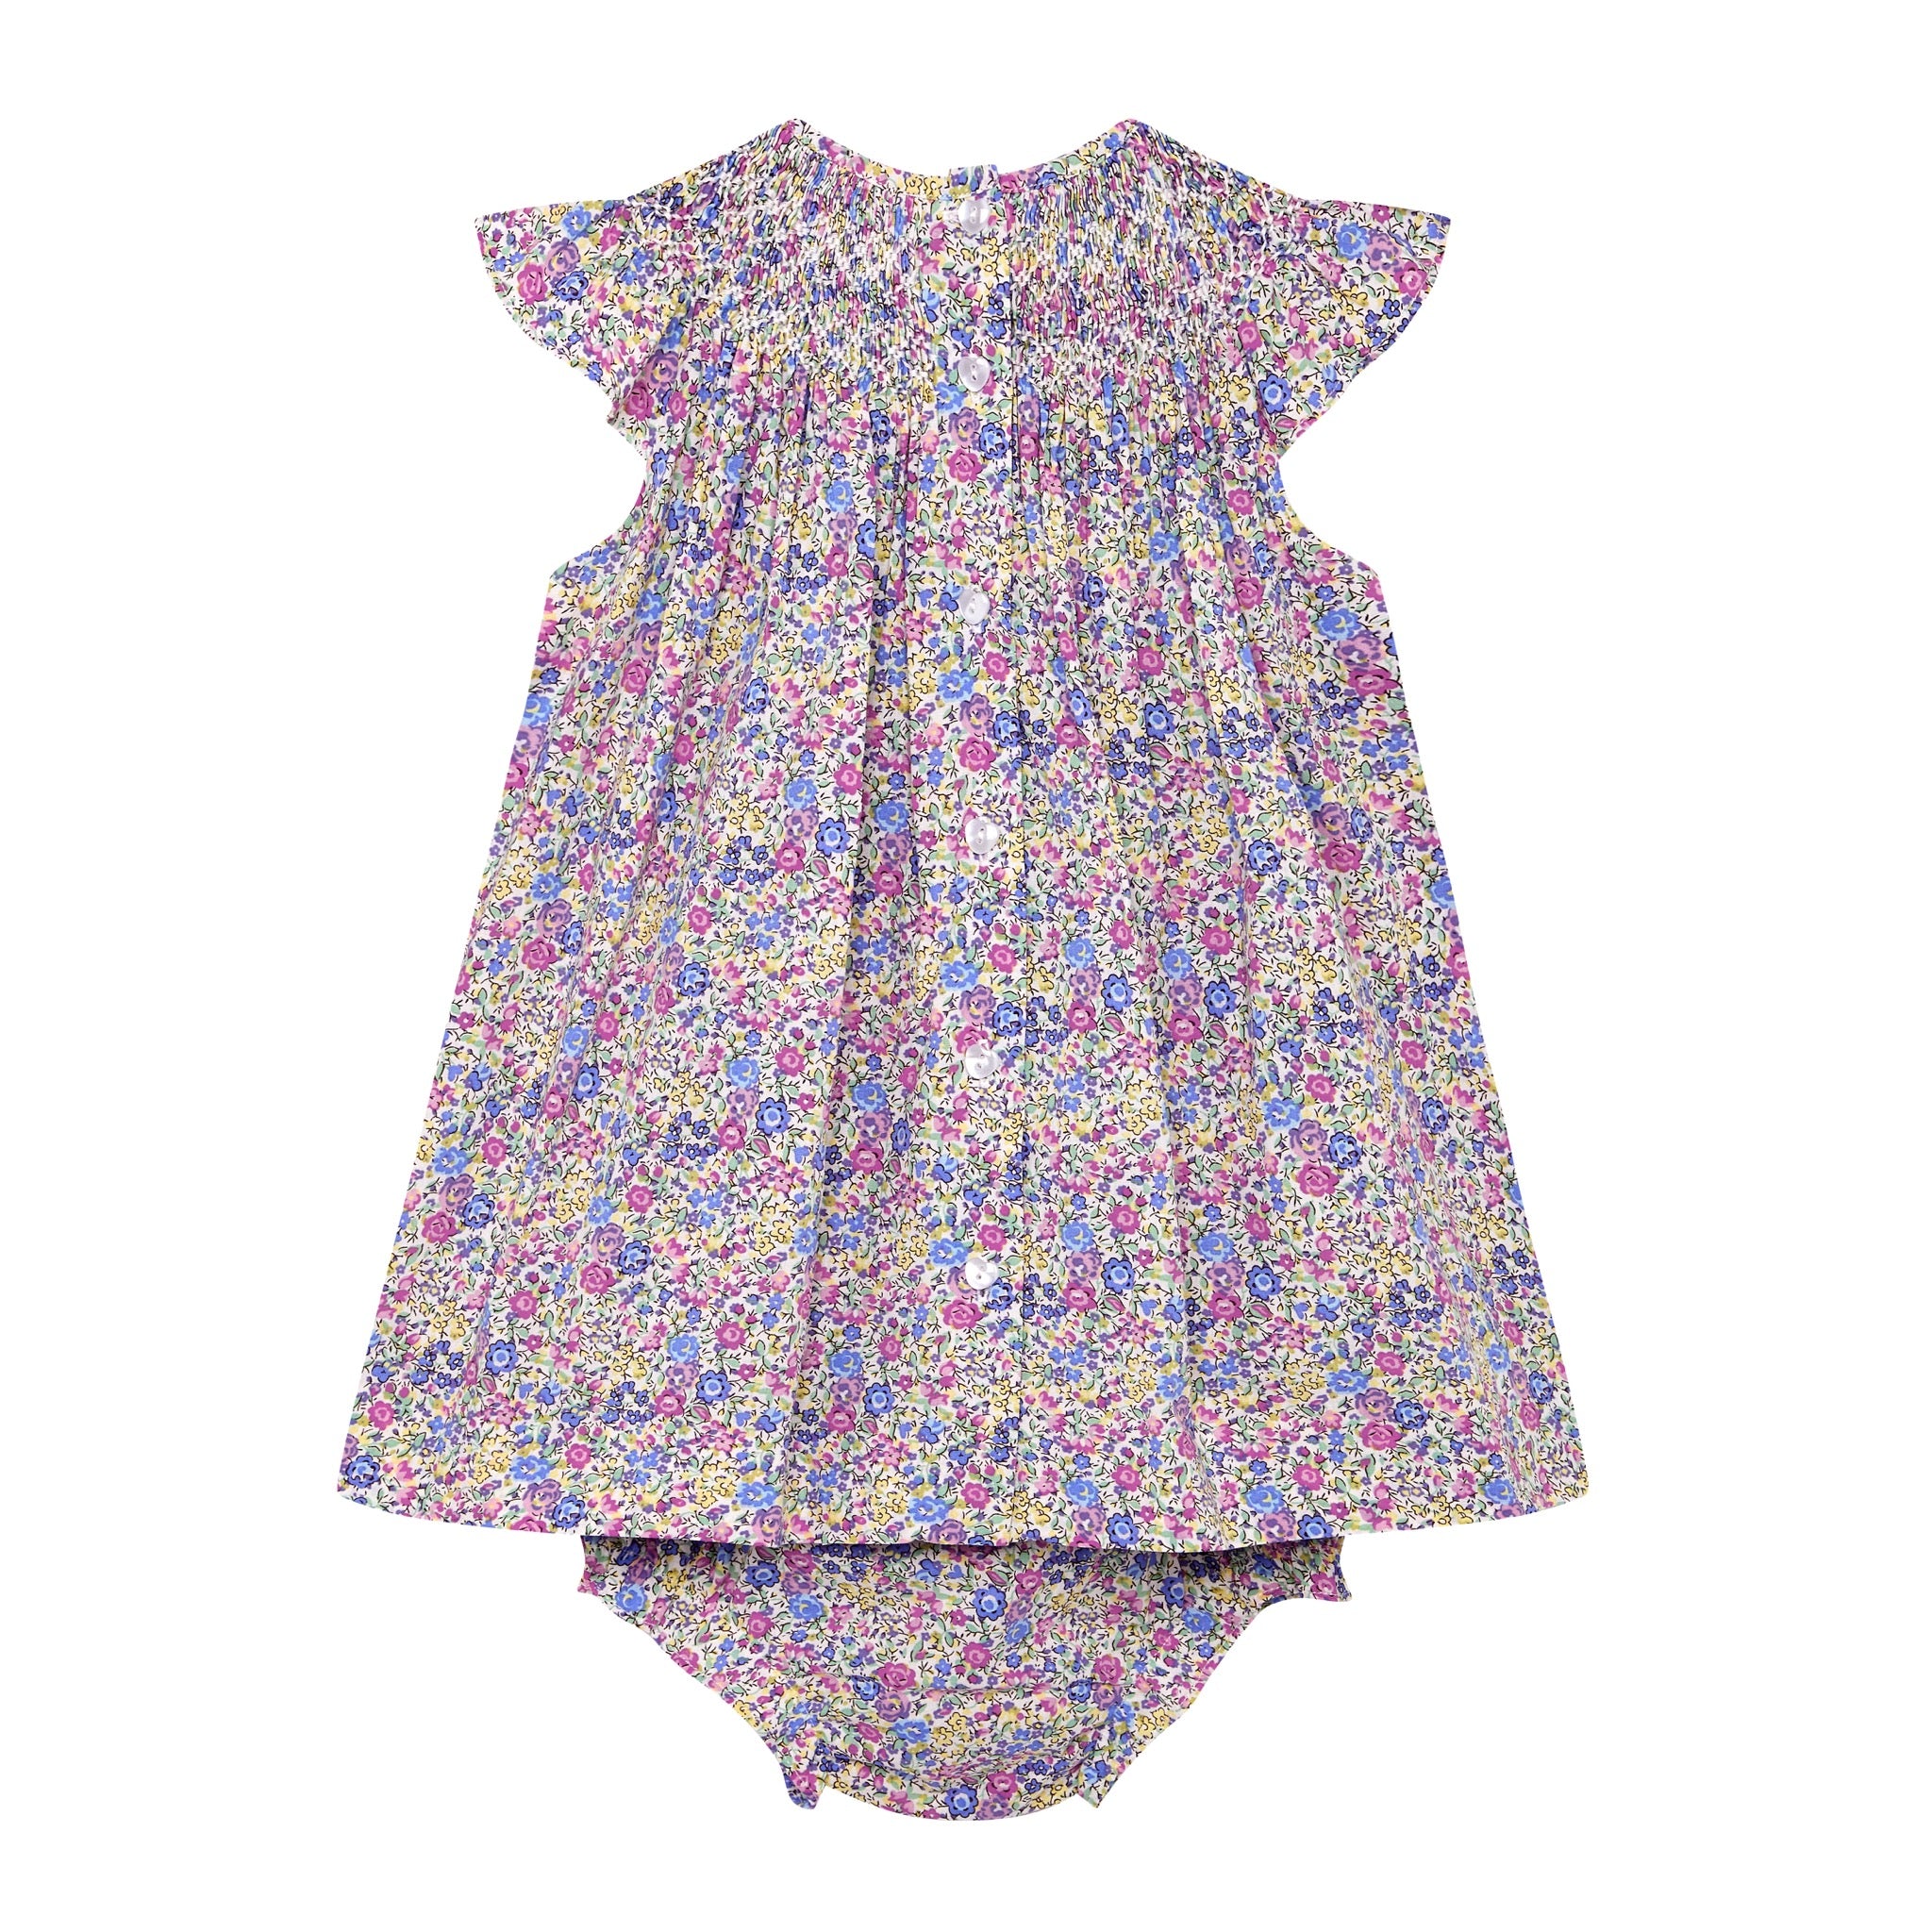 frill sleeve smock dress for baby in floral design, back